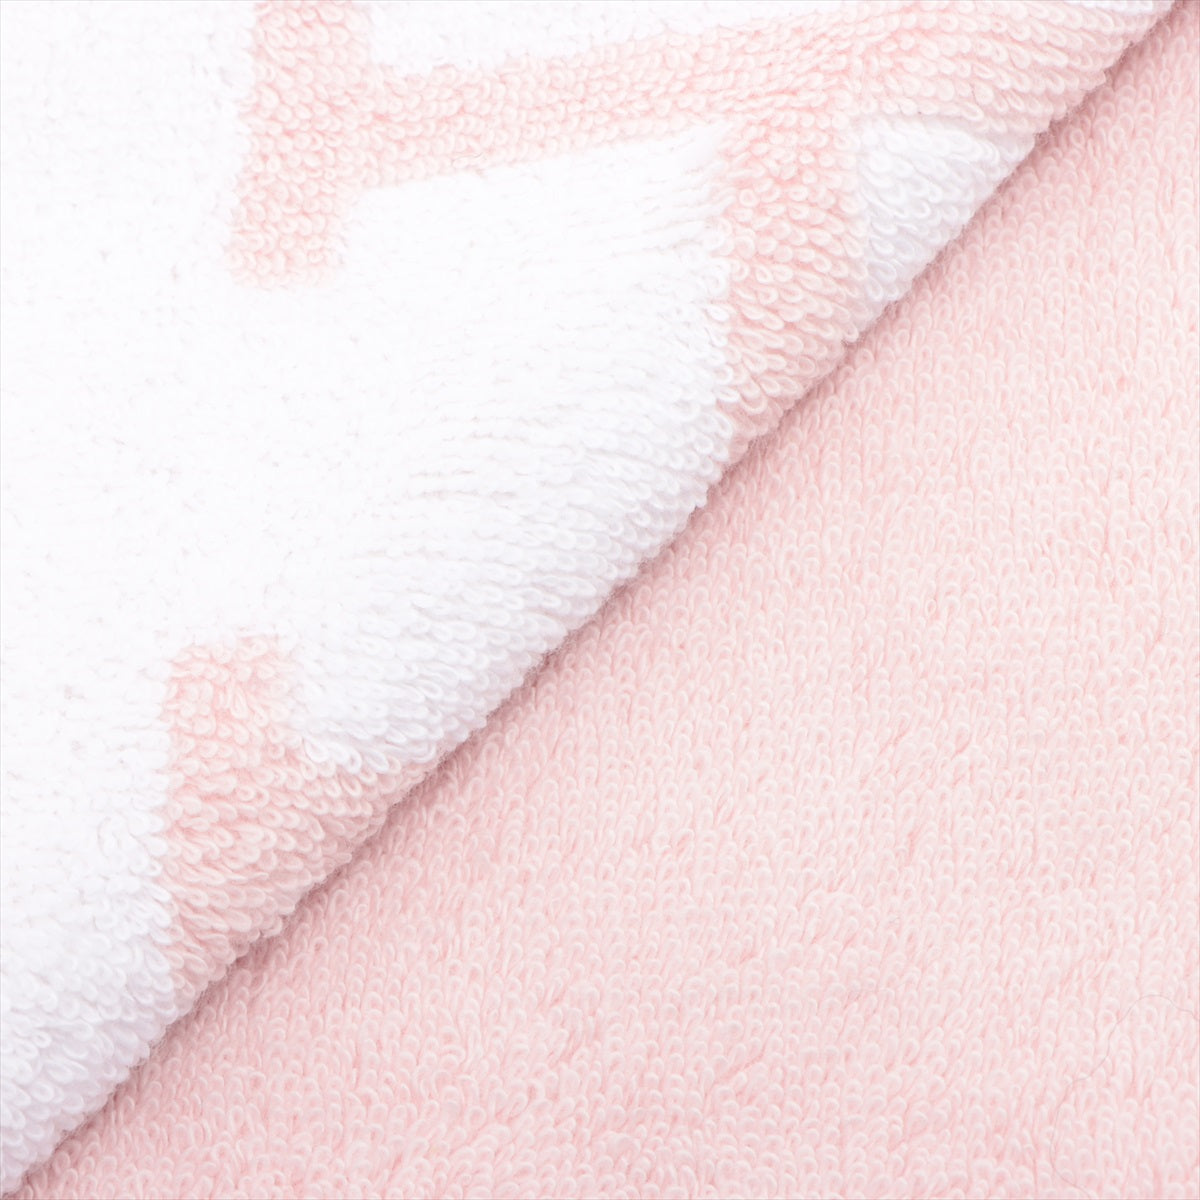 Hermès AVALONE Towel Cotton Pink